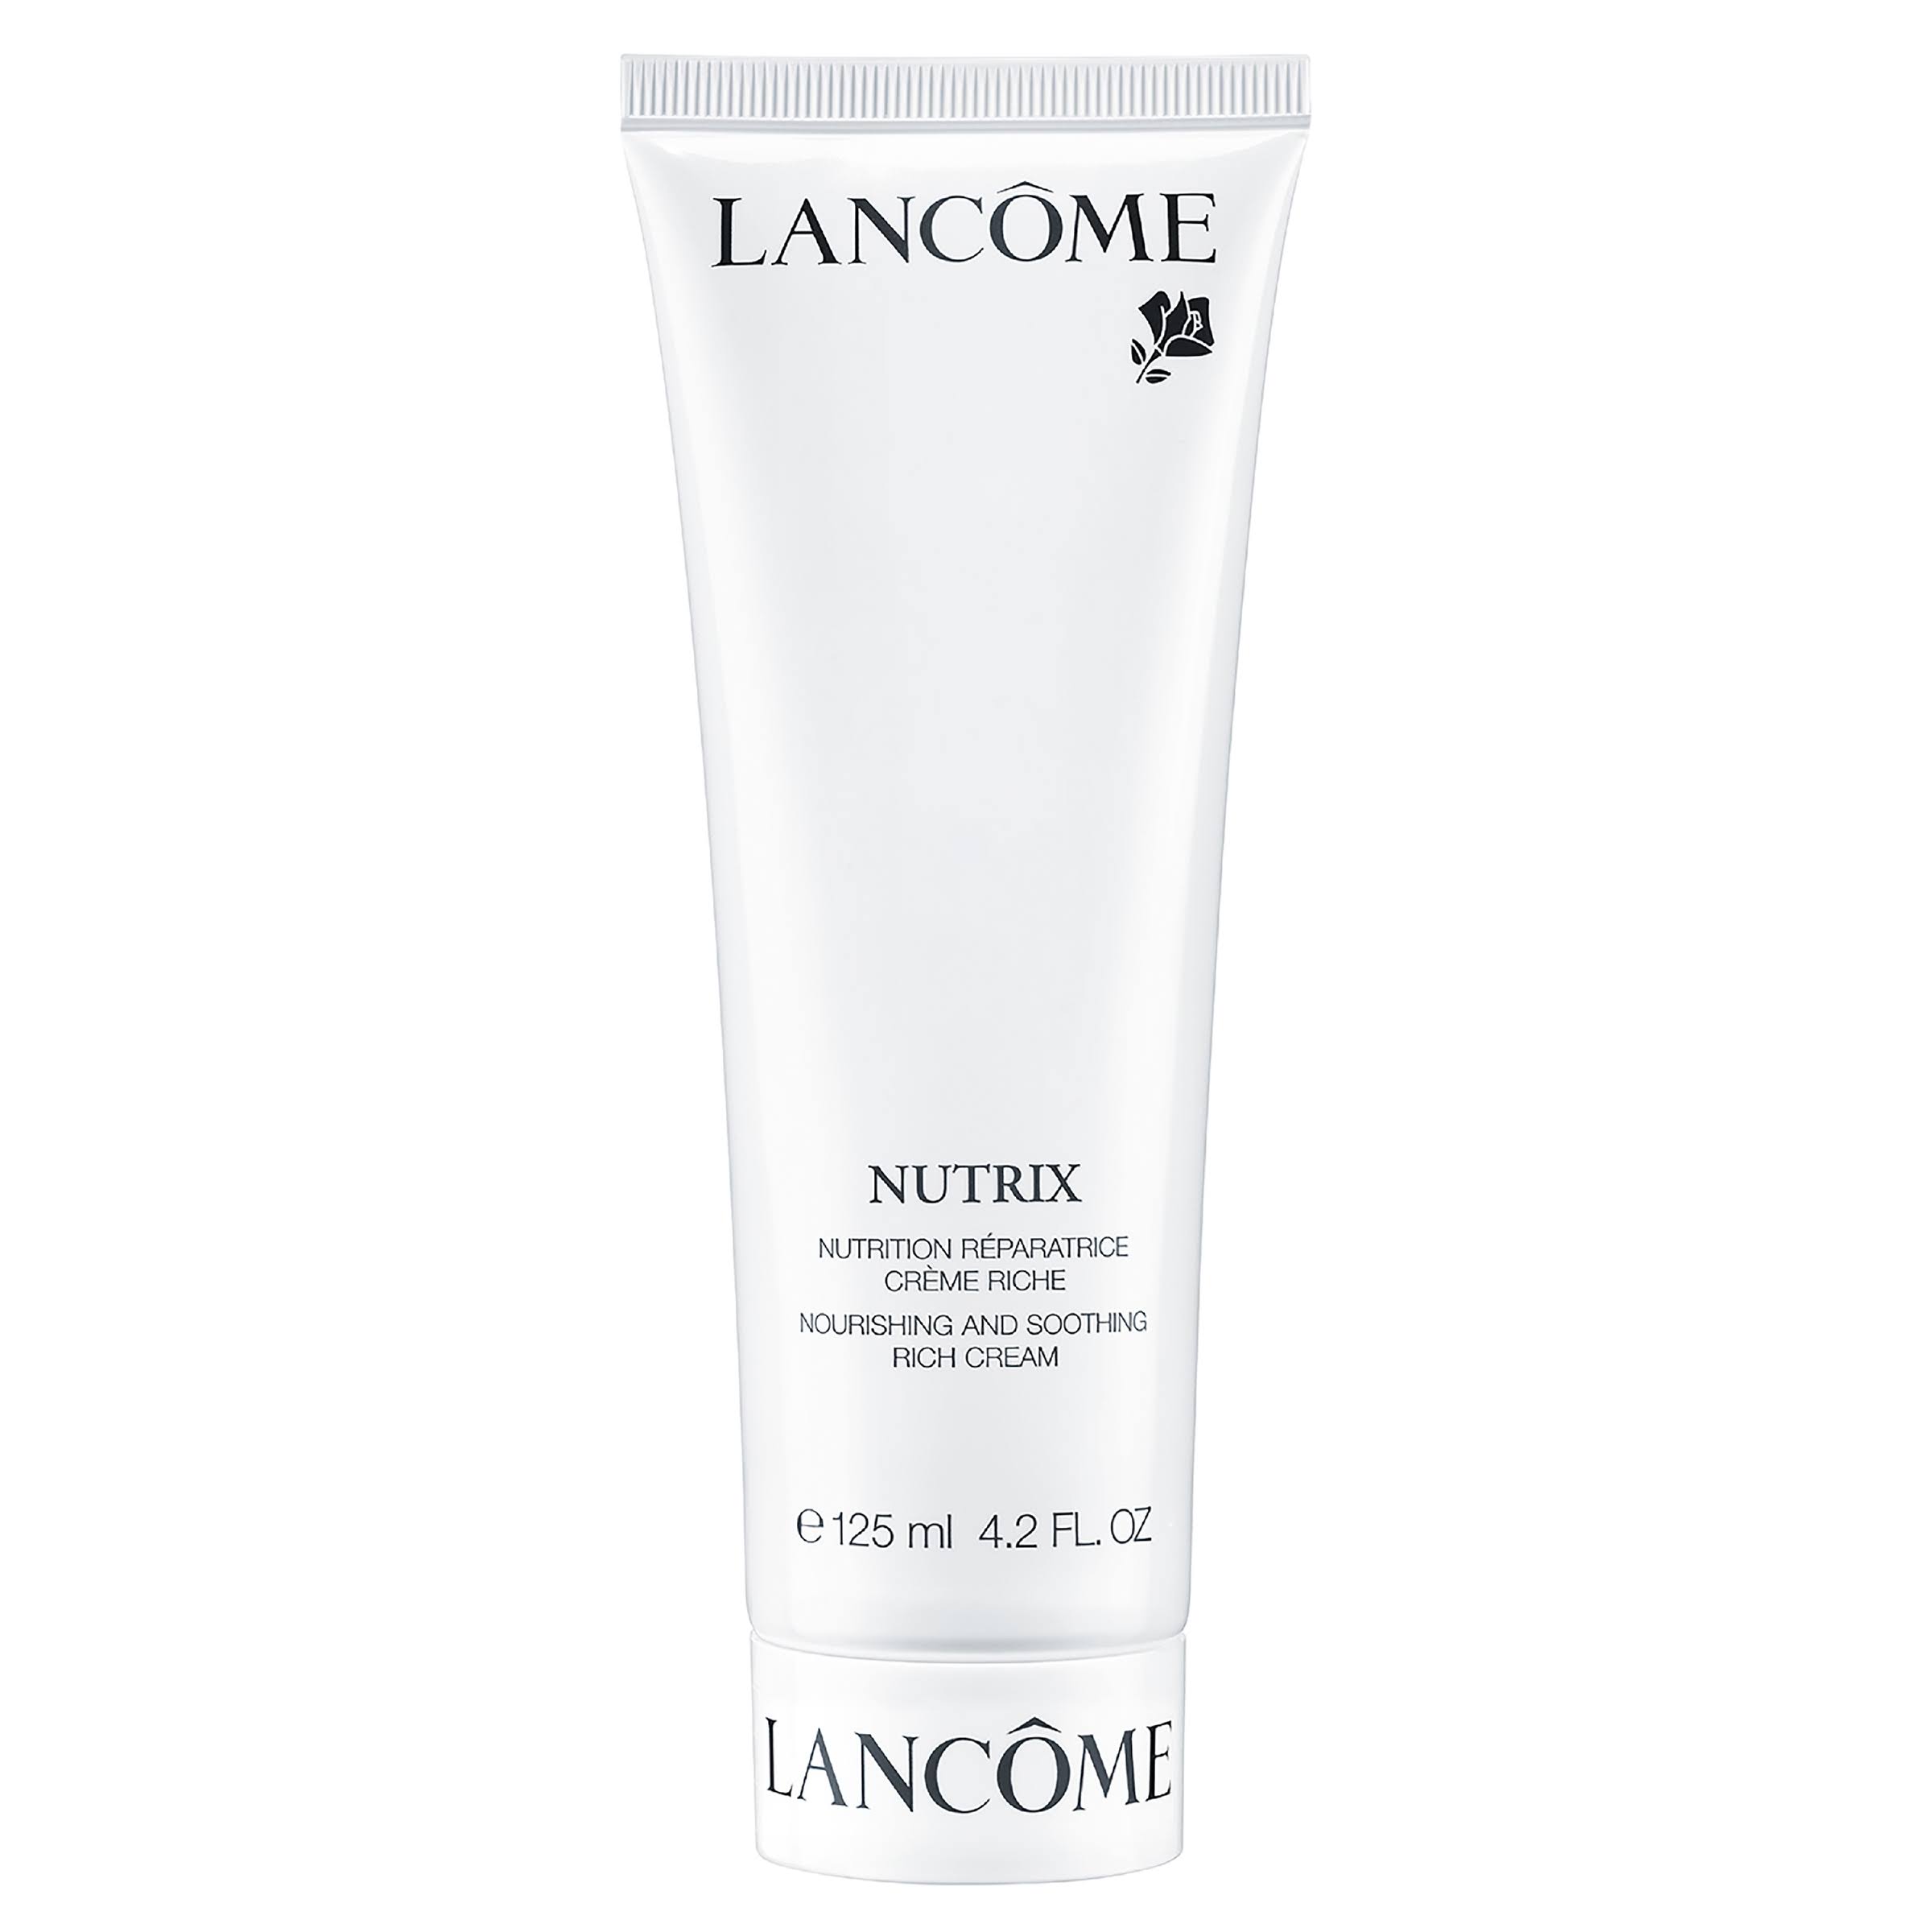 Lancome Nutrix Face Cream 125ml